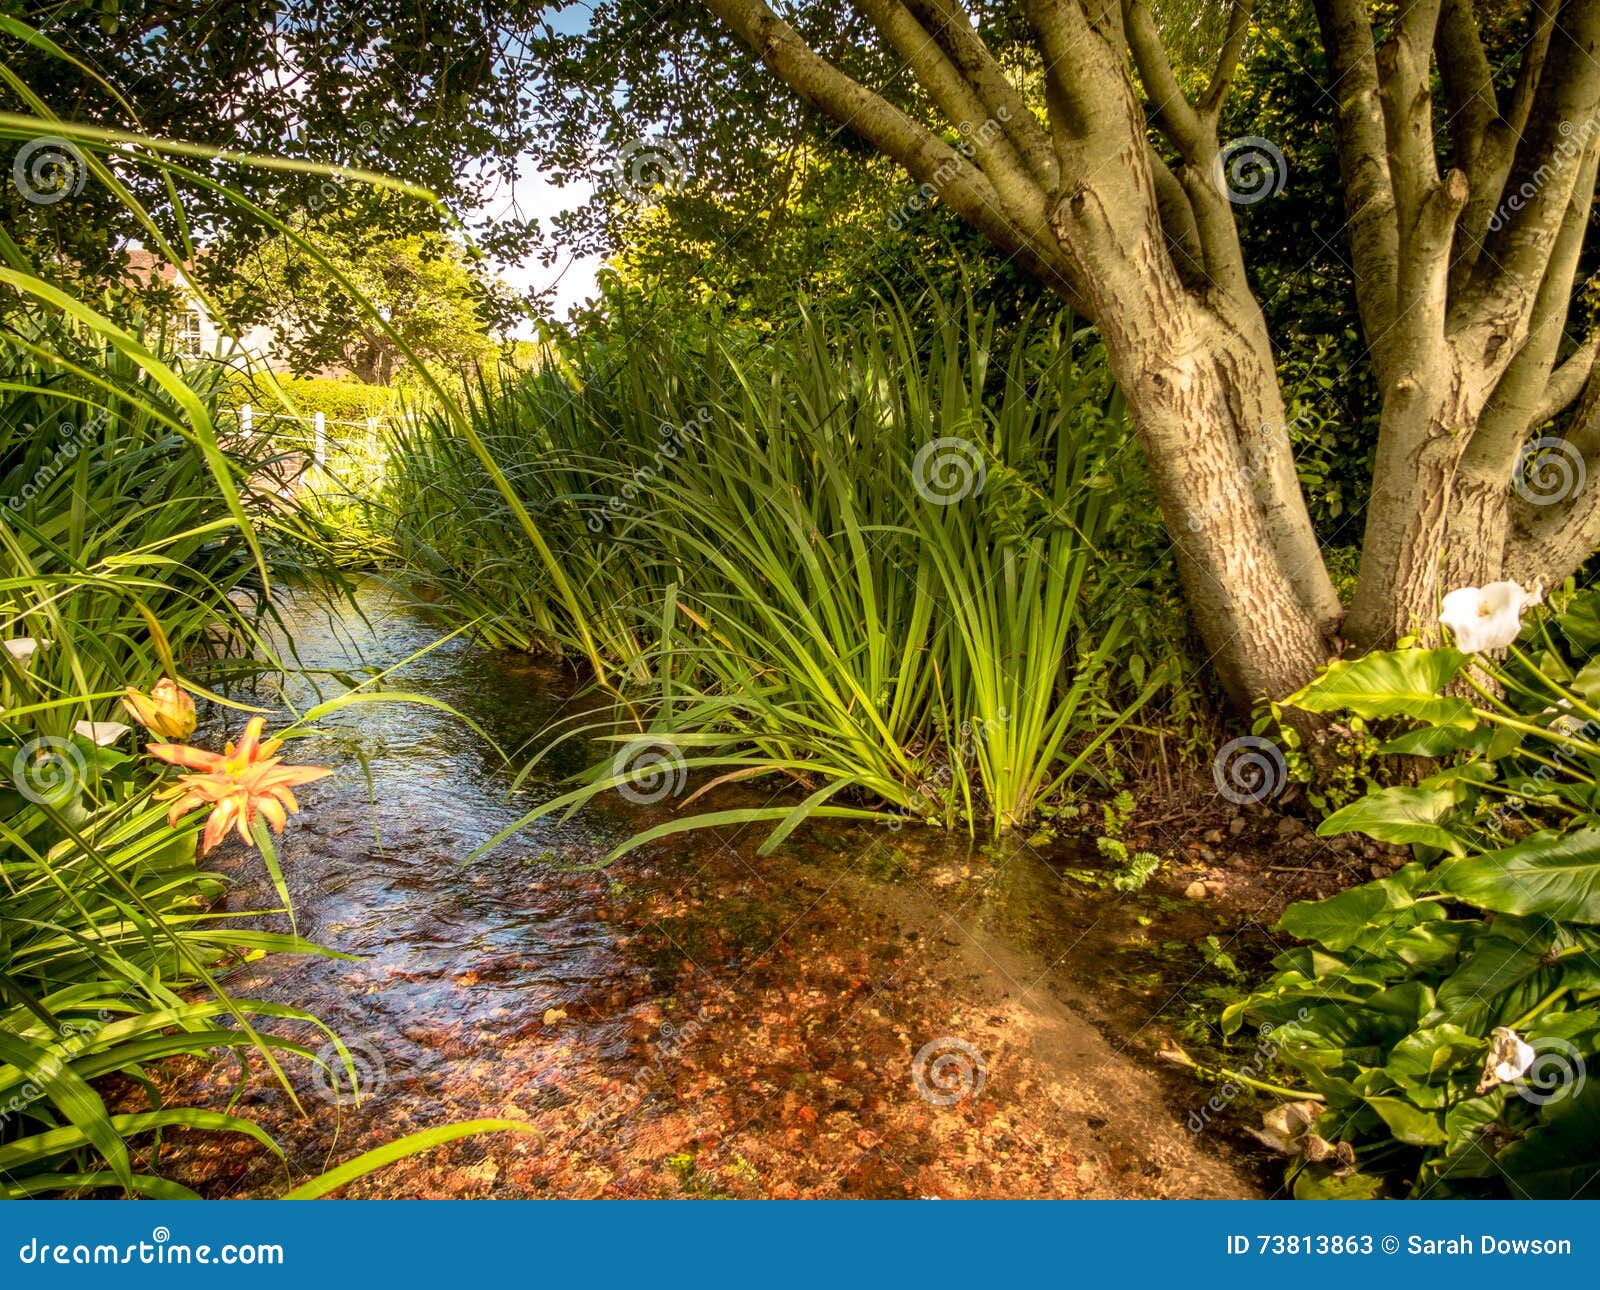 Garden Stream stock image. Image of pretty, countryside - 73813863